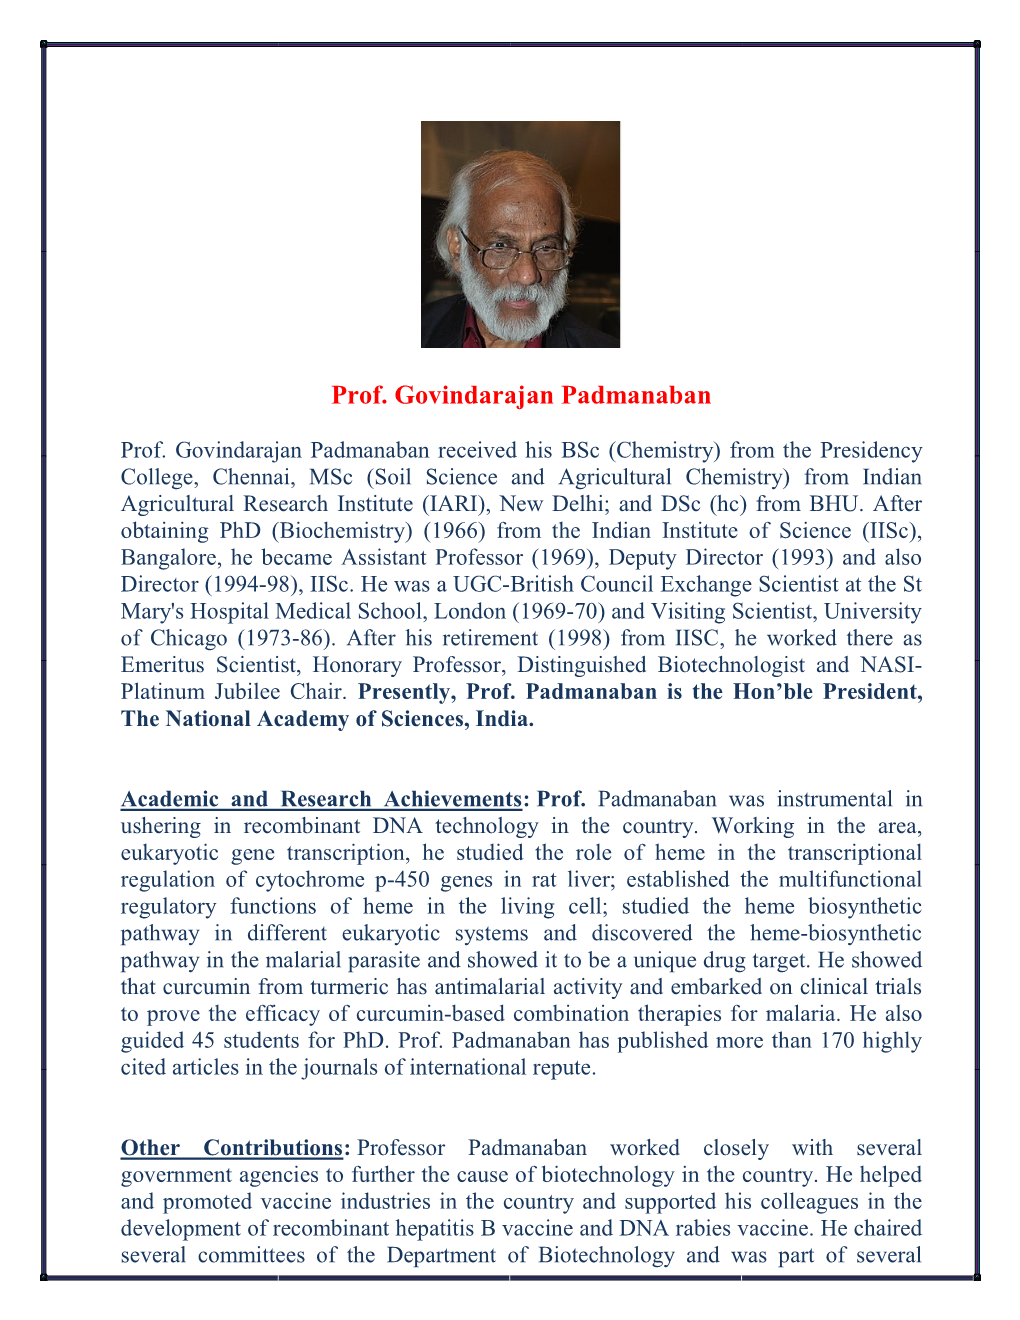 Prof. Govindarajan Padmanaban